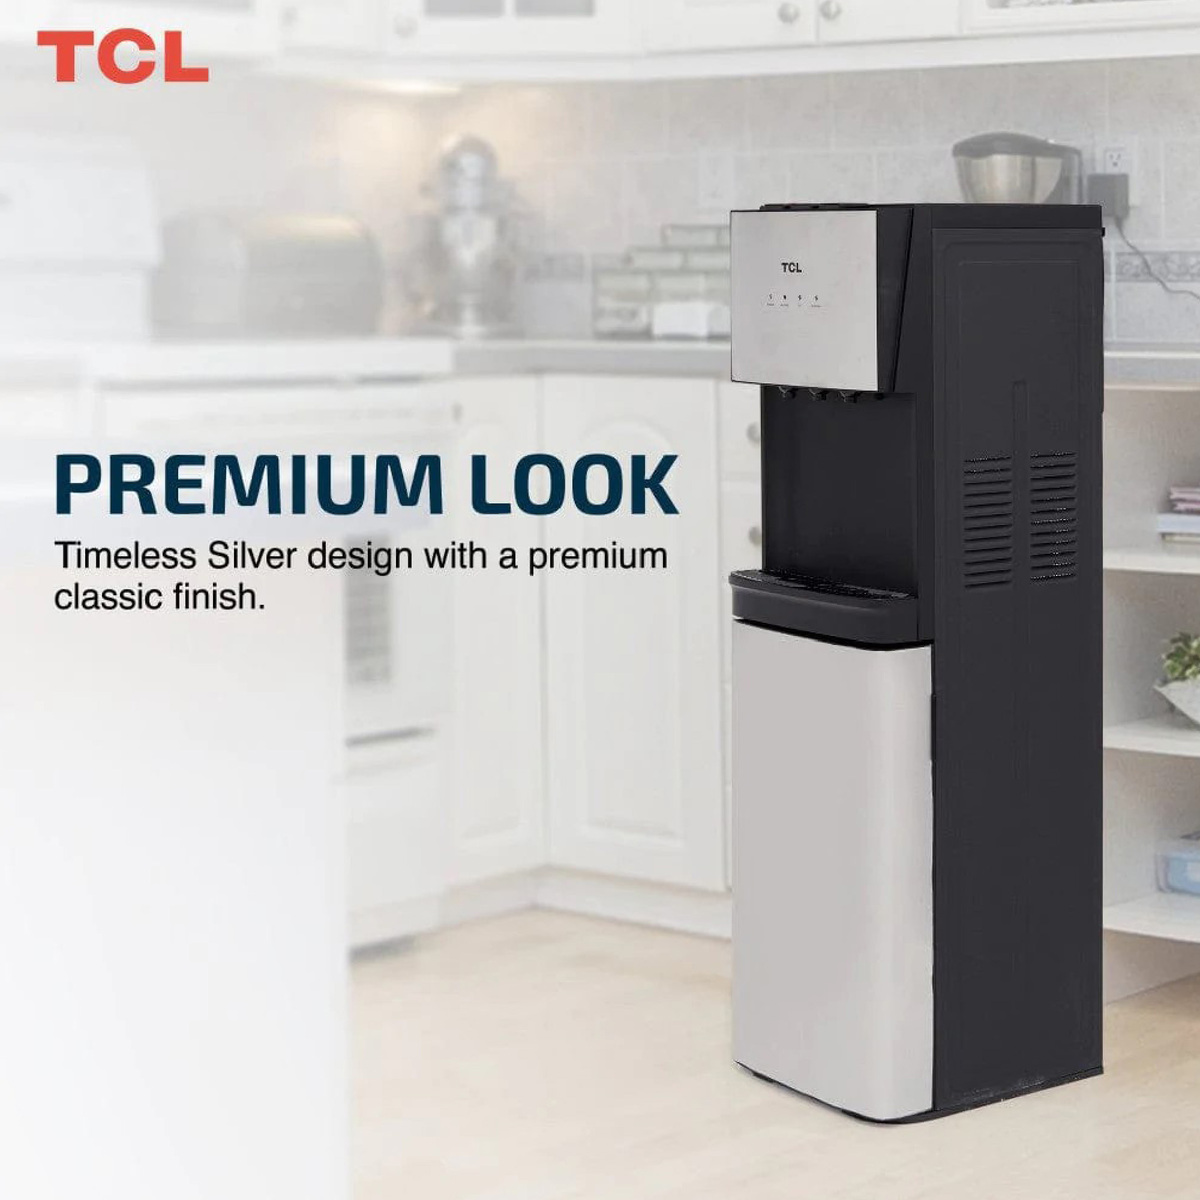 TCL Stainless Steel Bottom Loading 3 Tap Water Dispenser, Black and Sliver, TY-LWYR96UT